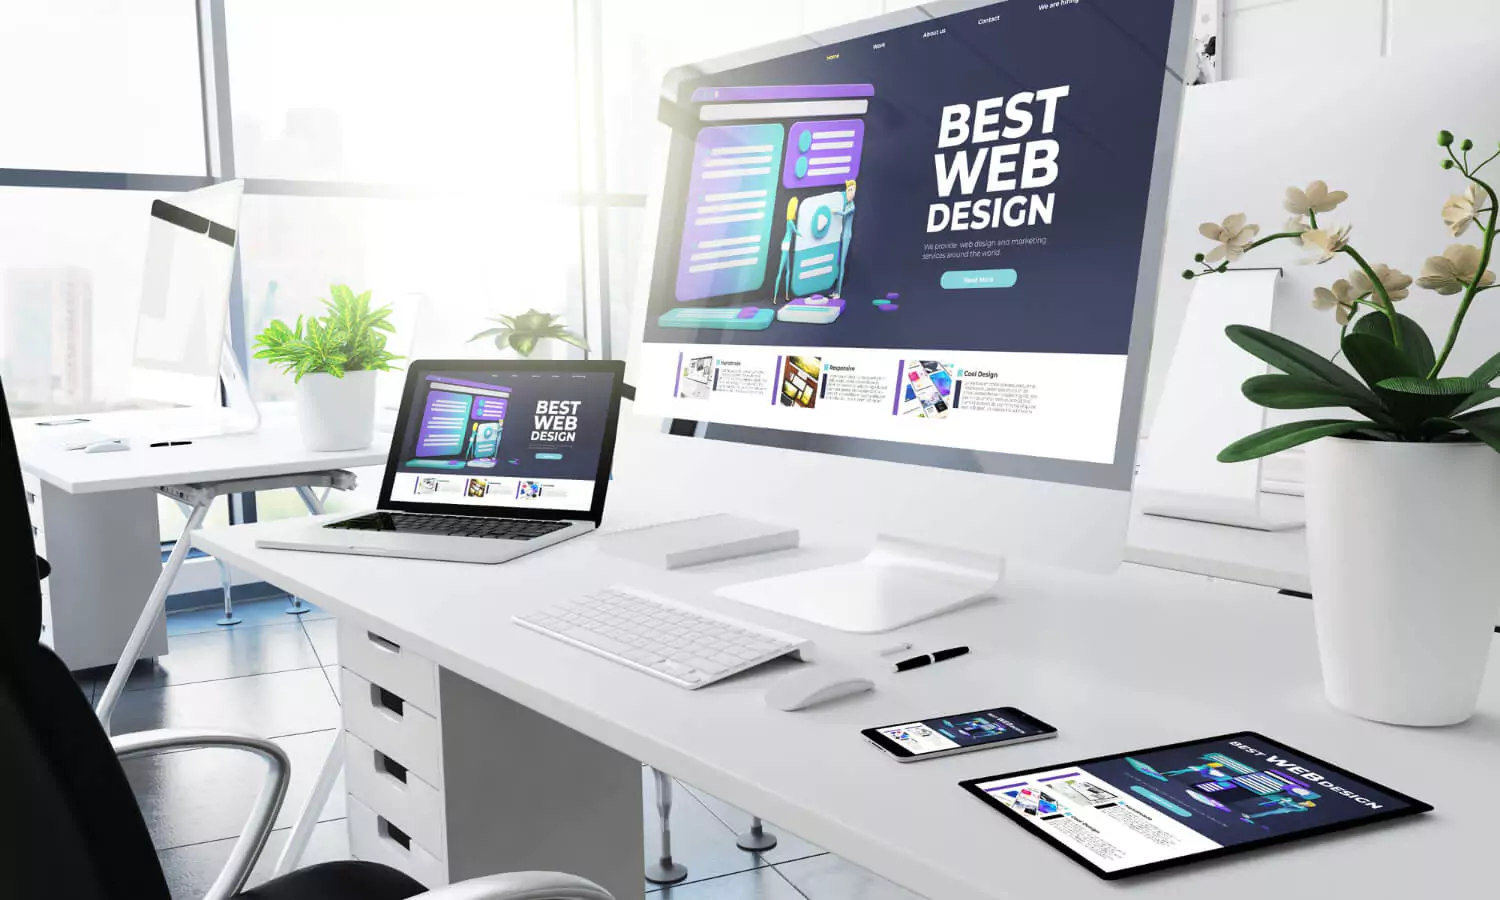 best web design company